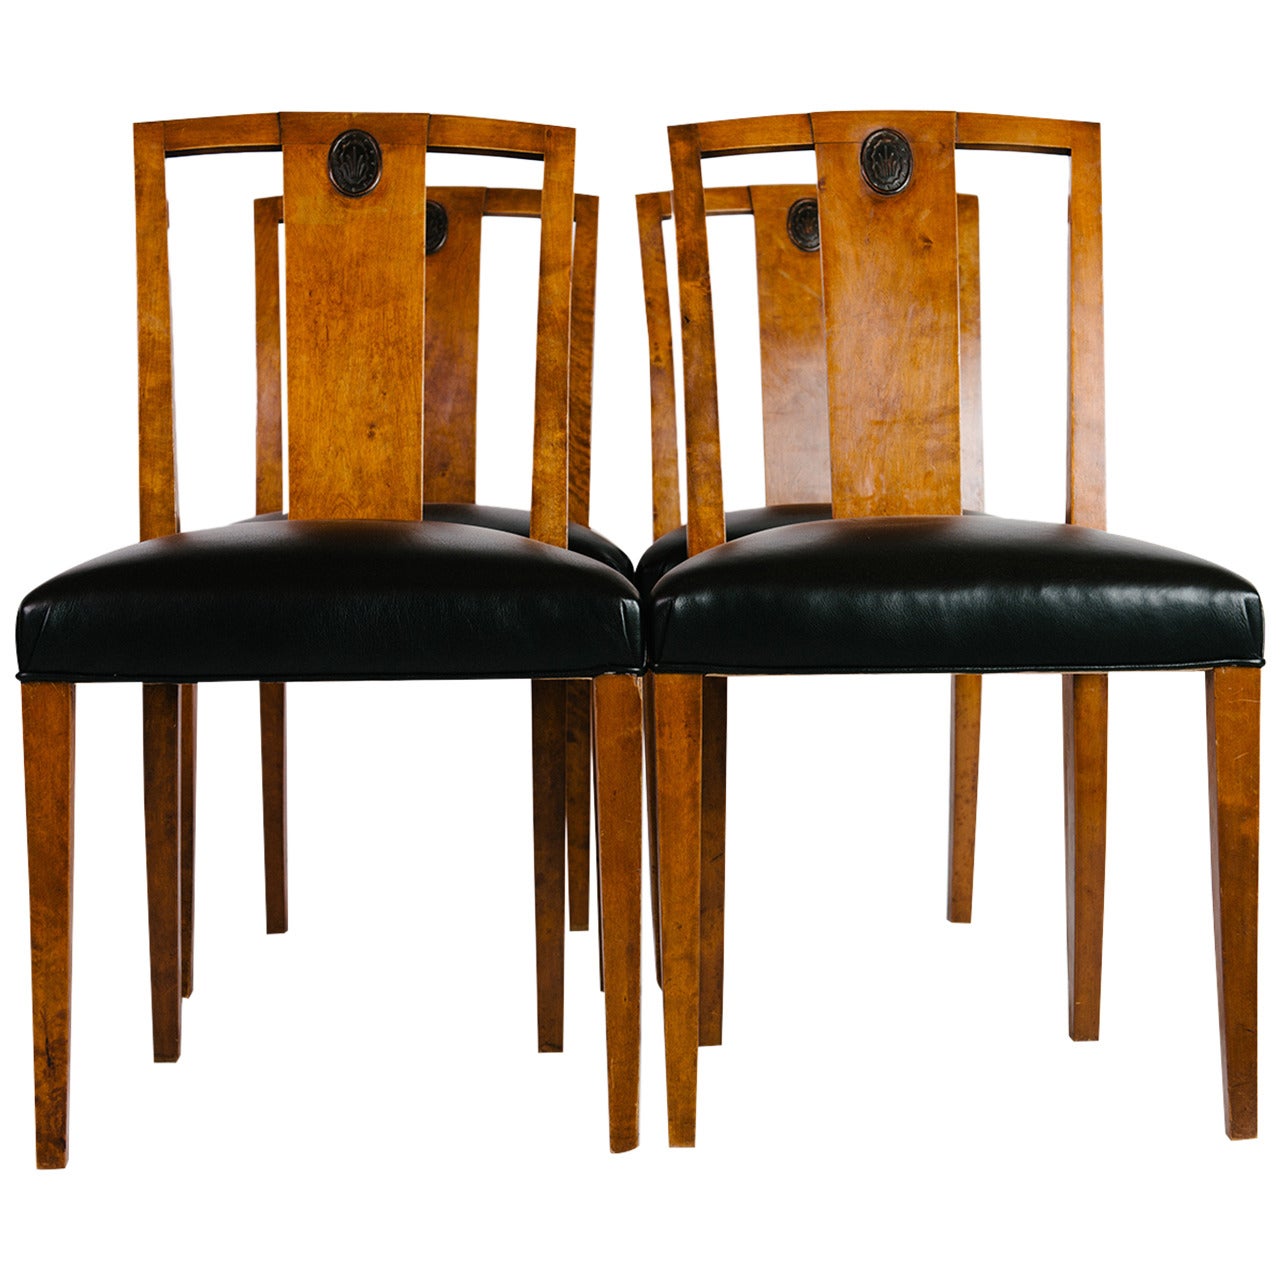 Four 19th Century Georgian Style Chairs